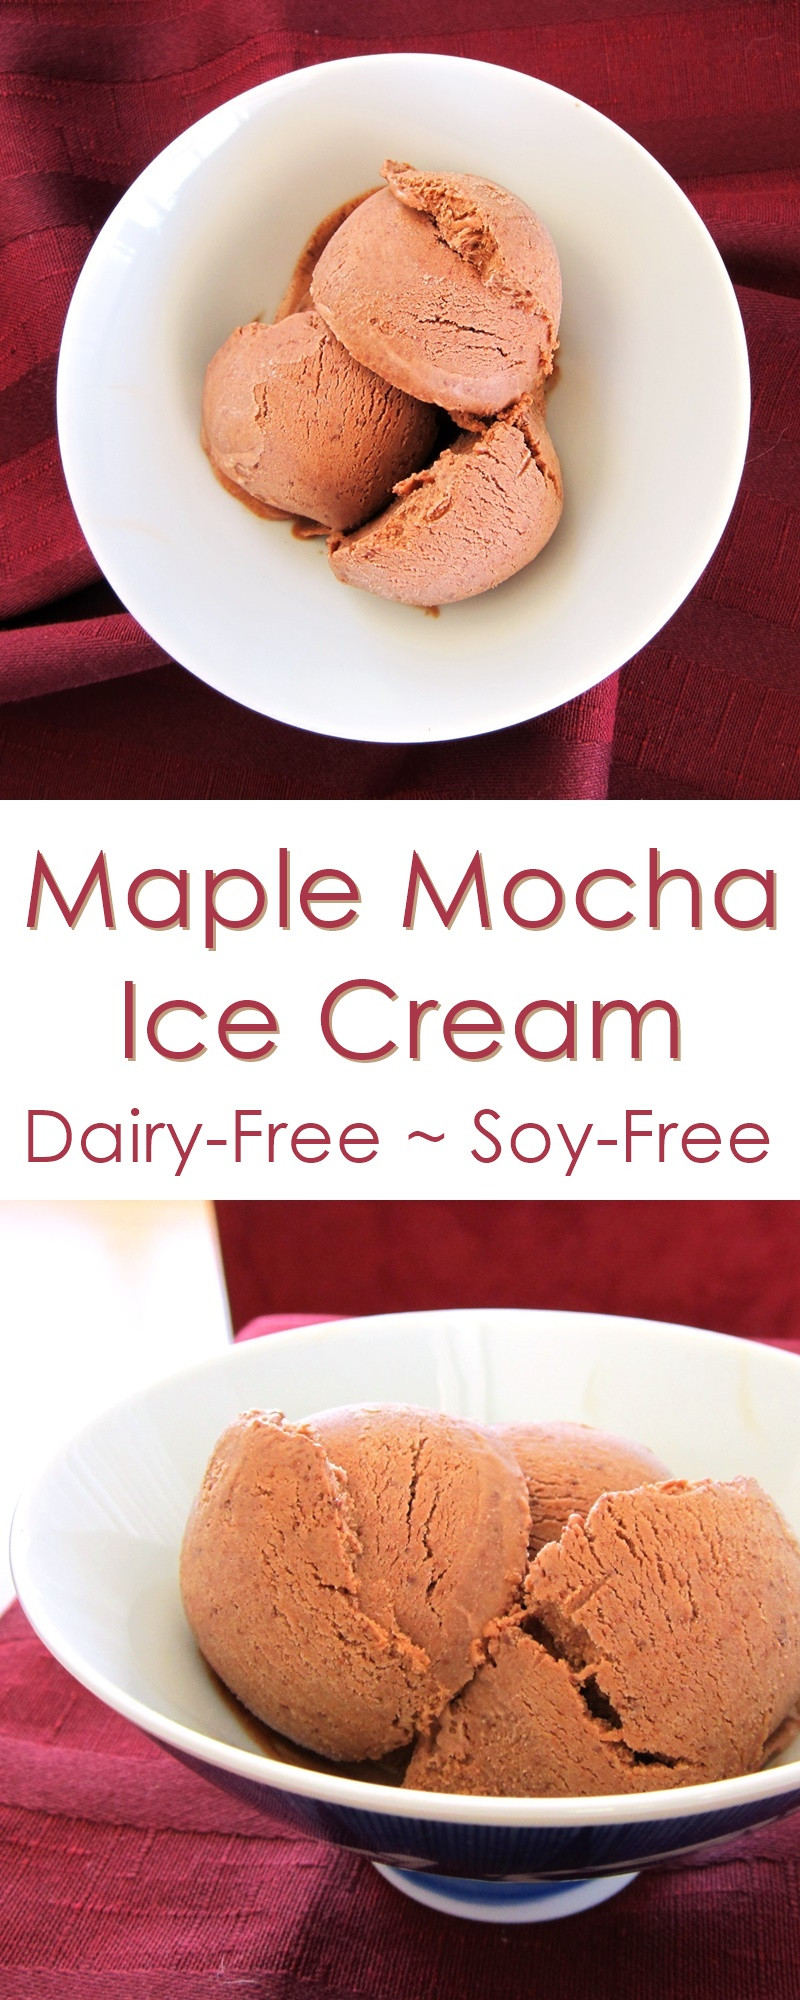 Soy Free Dairy Free Recipes
 Maple Mocha Vegan Ice Cream Recipe Dairy Free